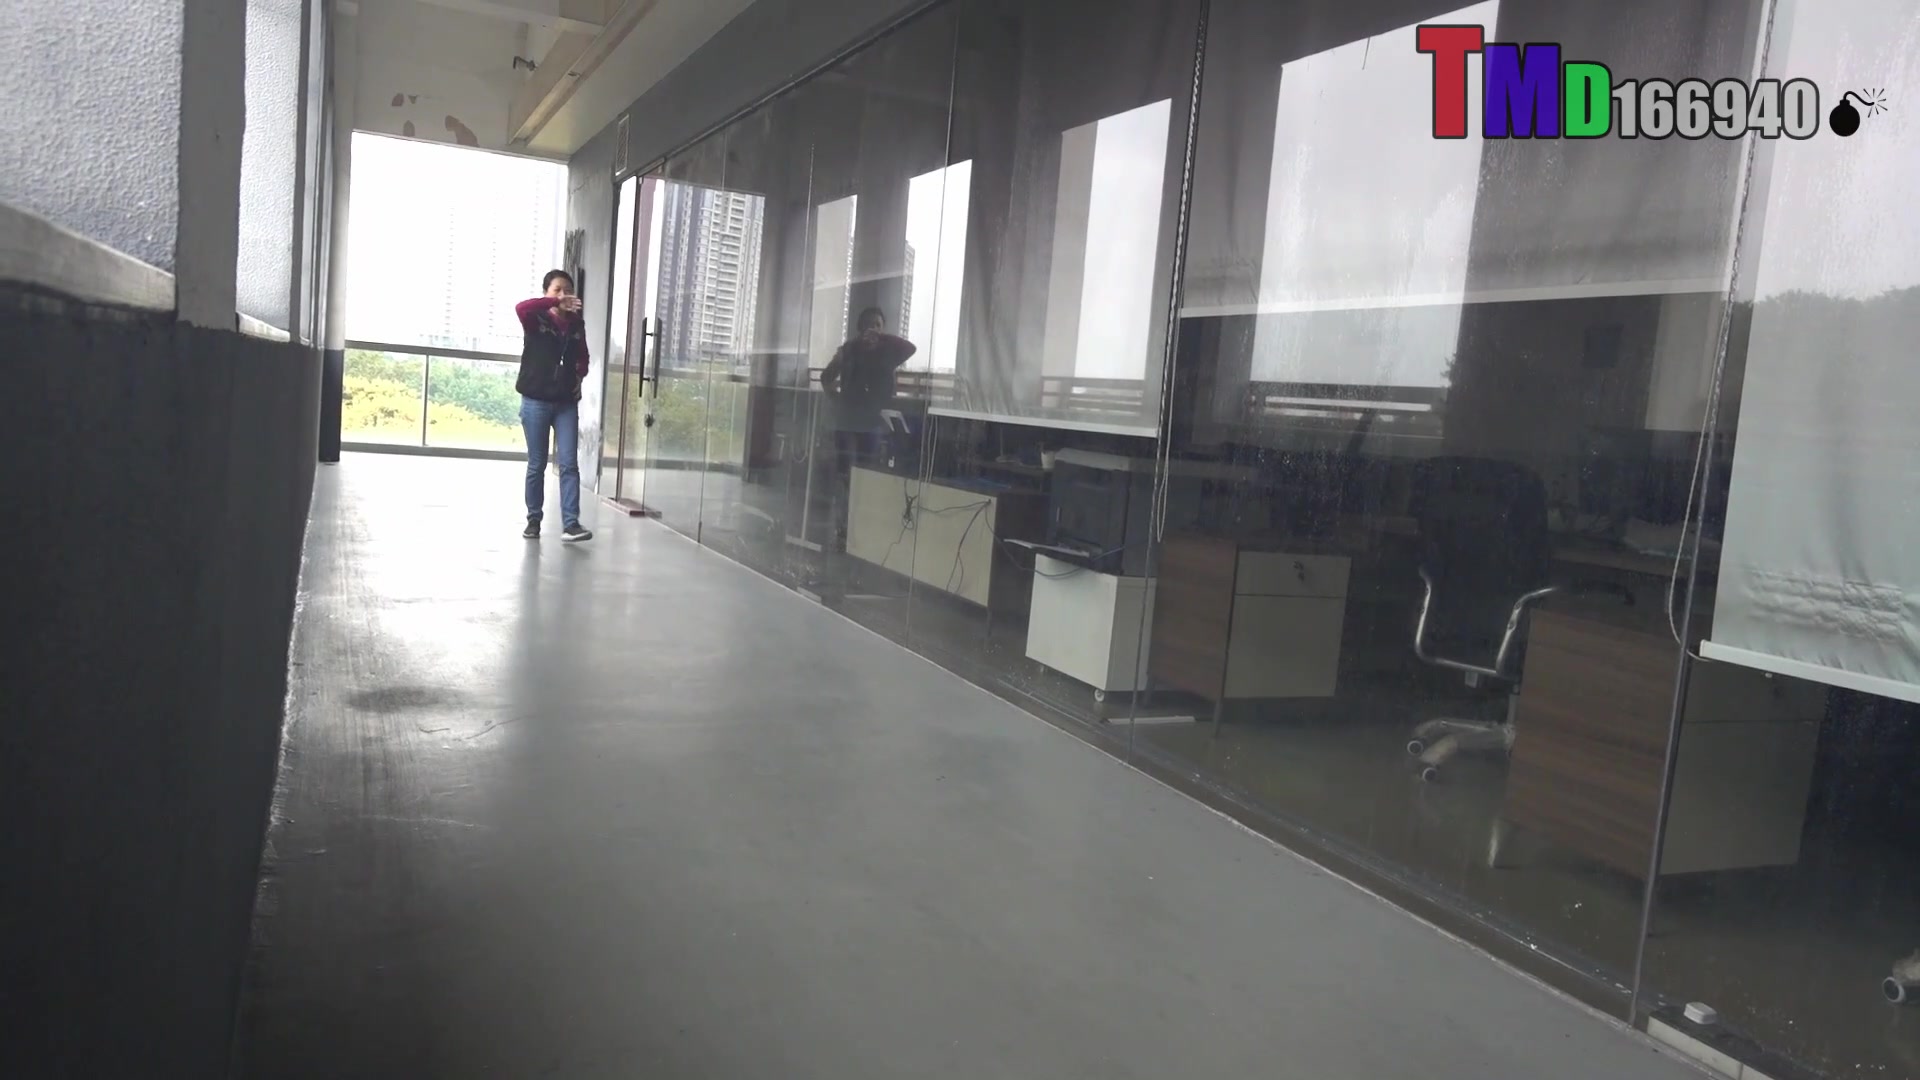 China hospital toilet voyeur - video 2 - ThisVid.com